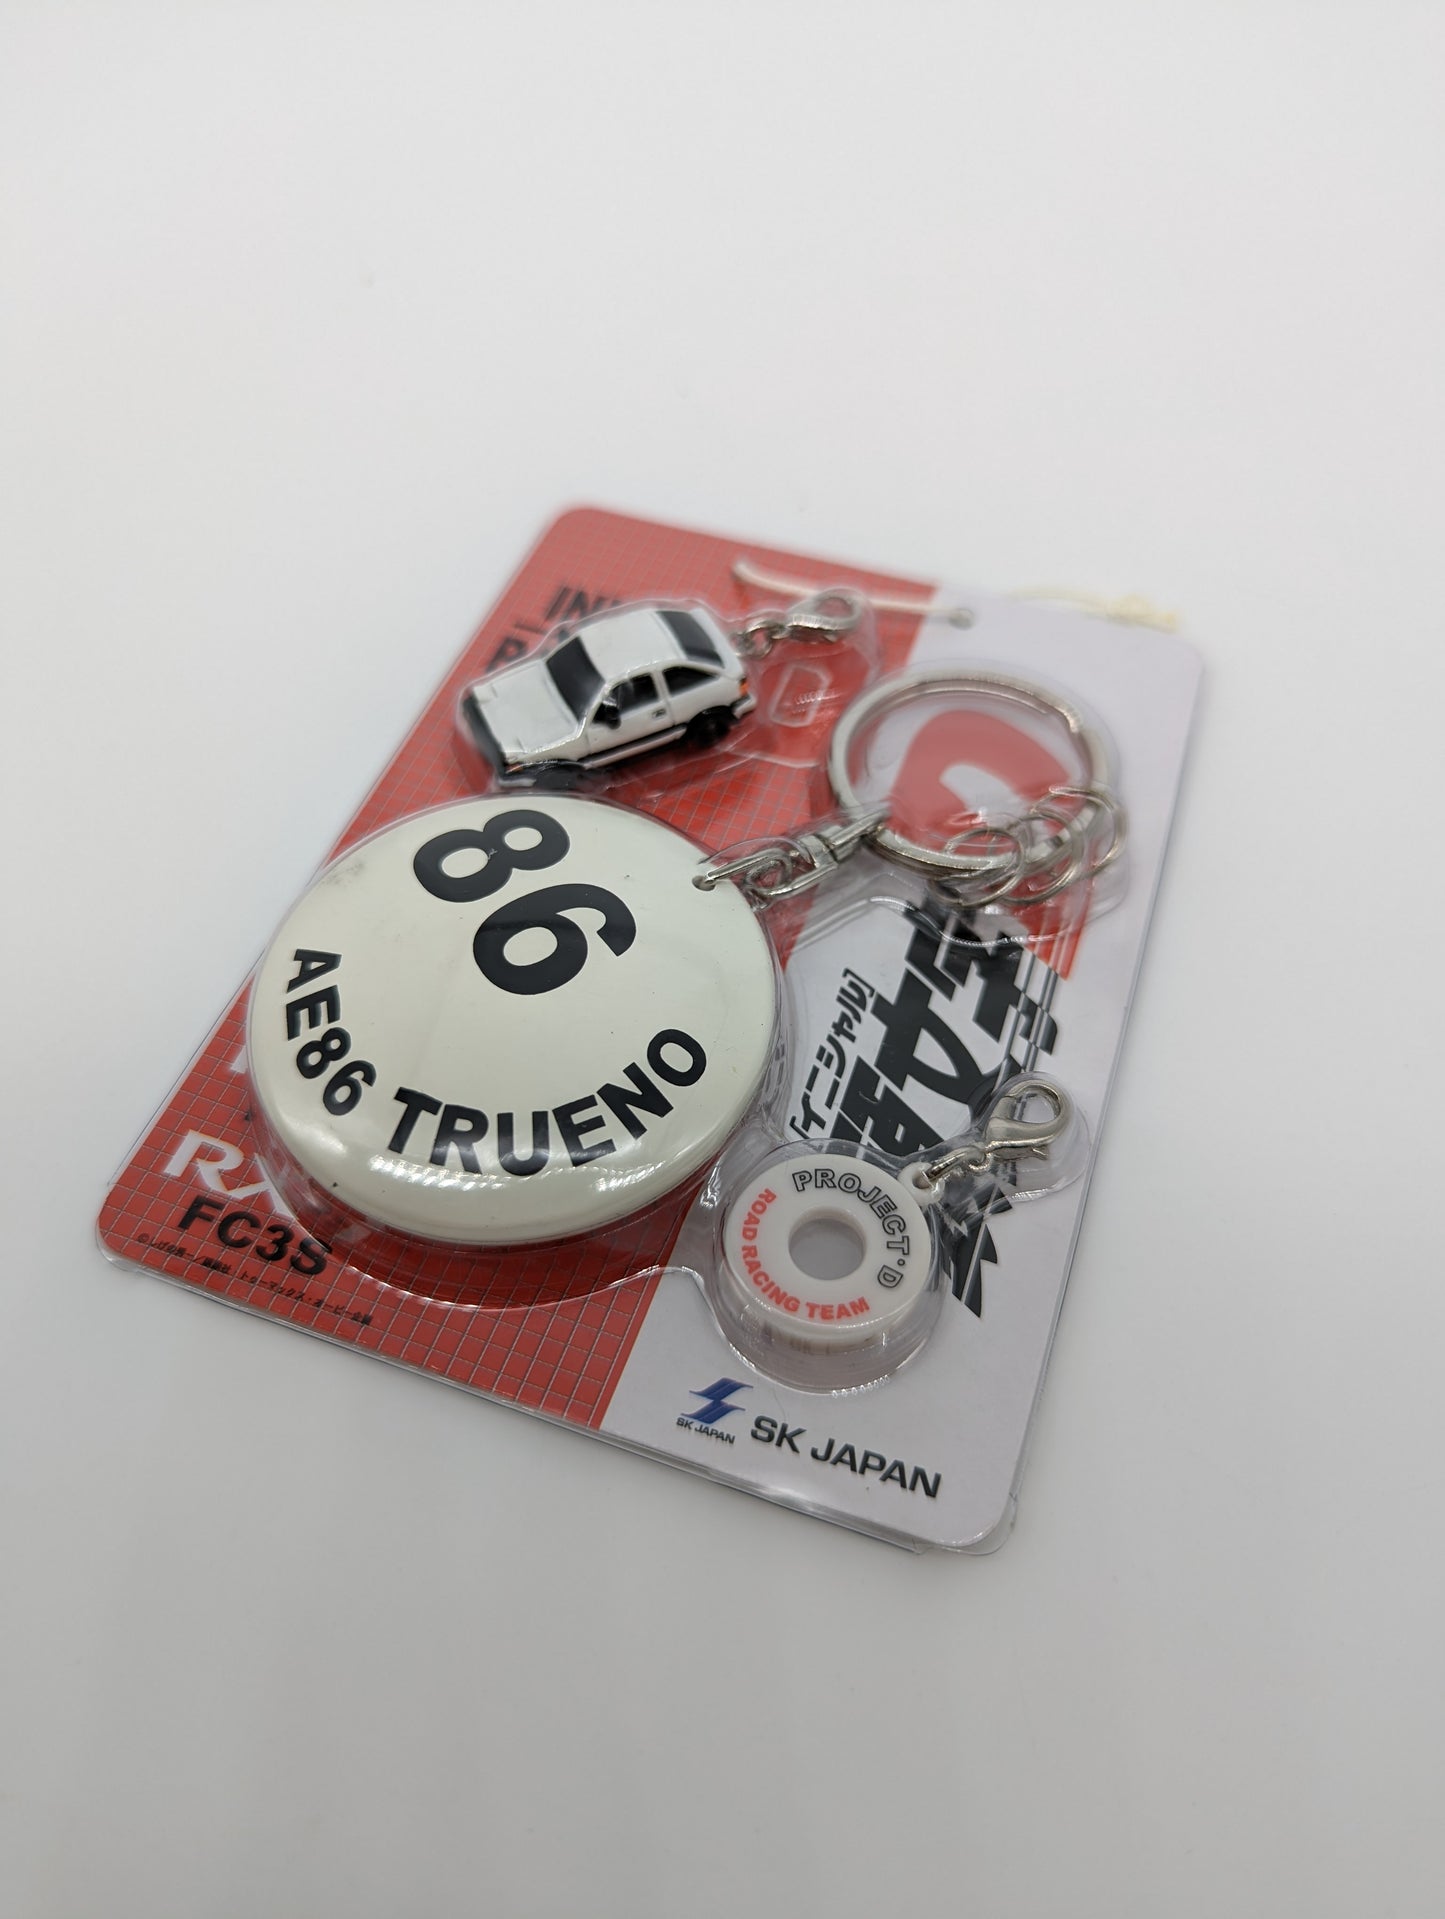 AE68 Trueno Initial D keychain